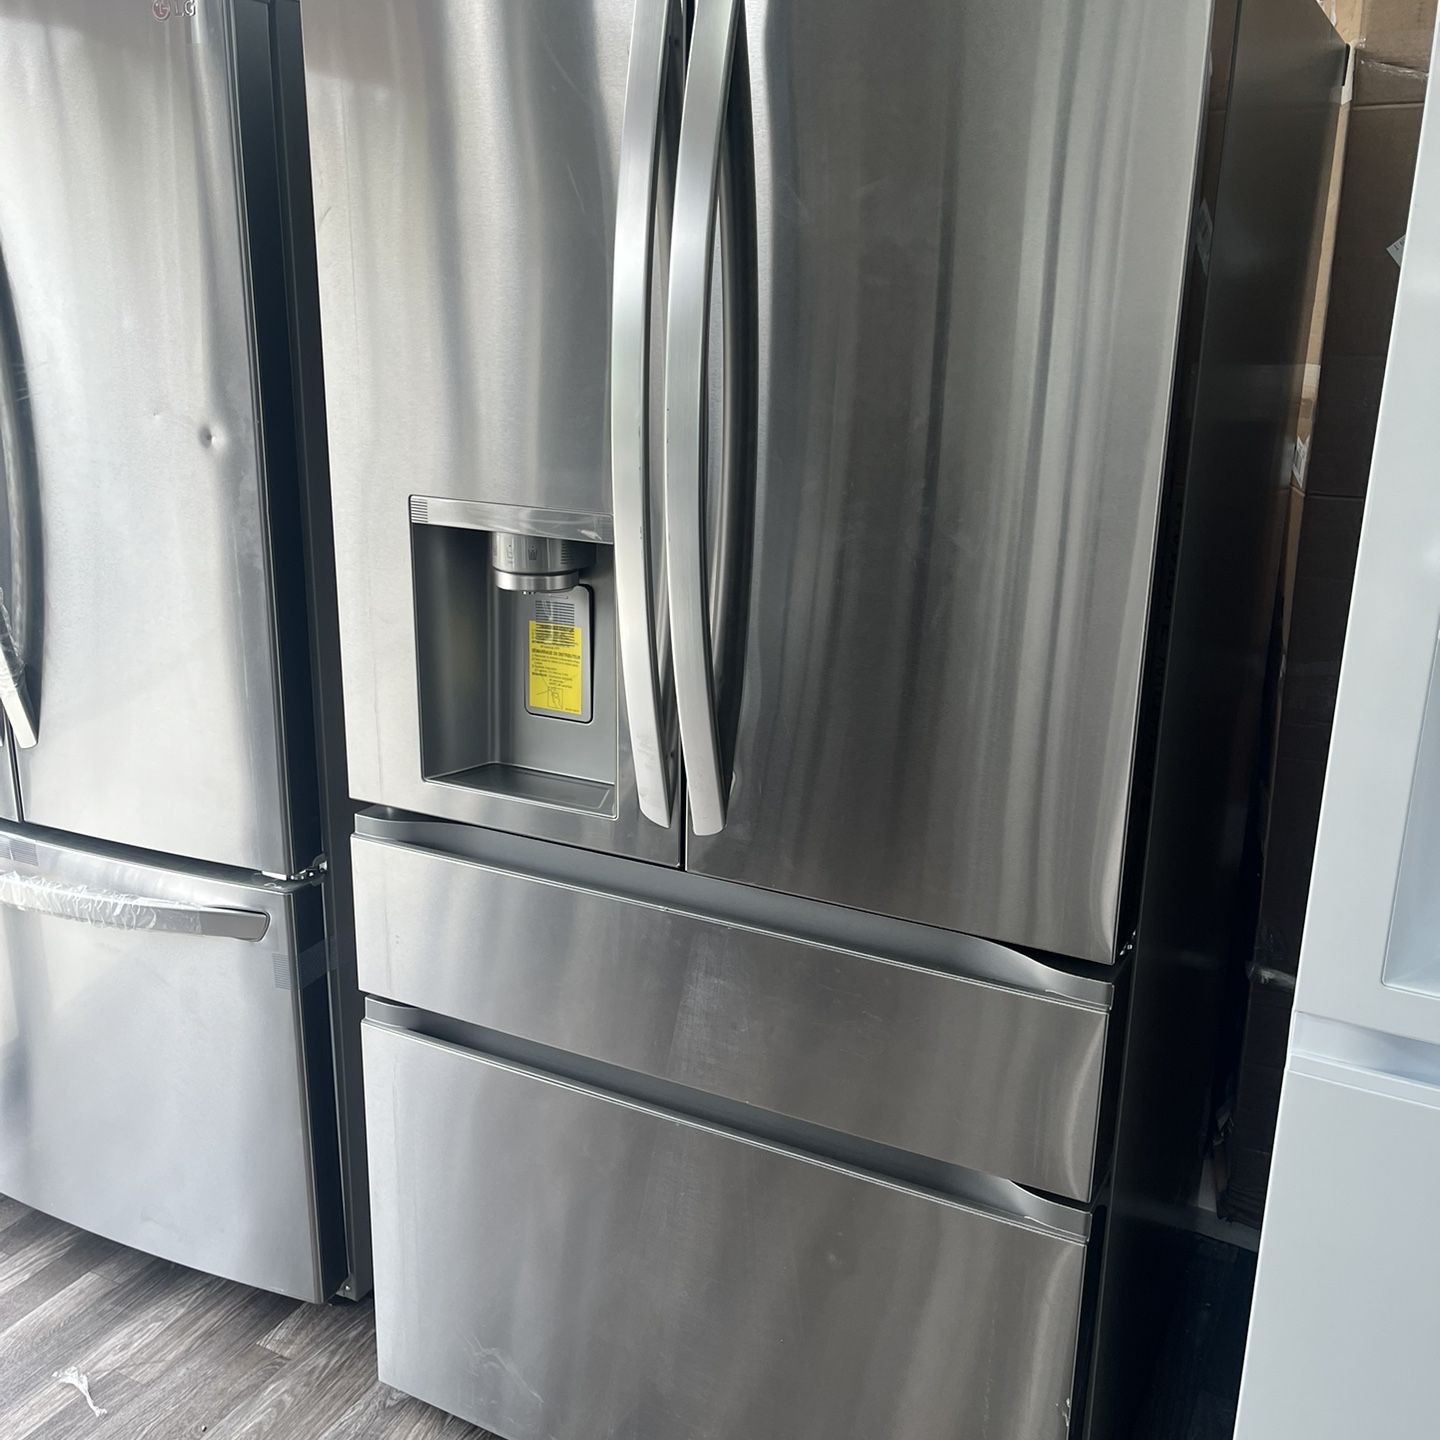 ONLY $1299!!! LG Standard Depth MAX French Door Refrigerator w/ Full Convert Drawer